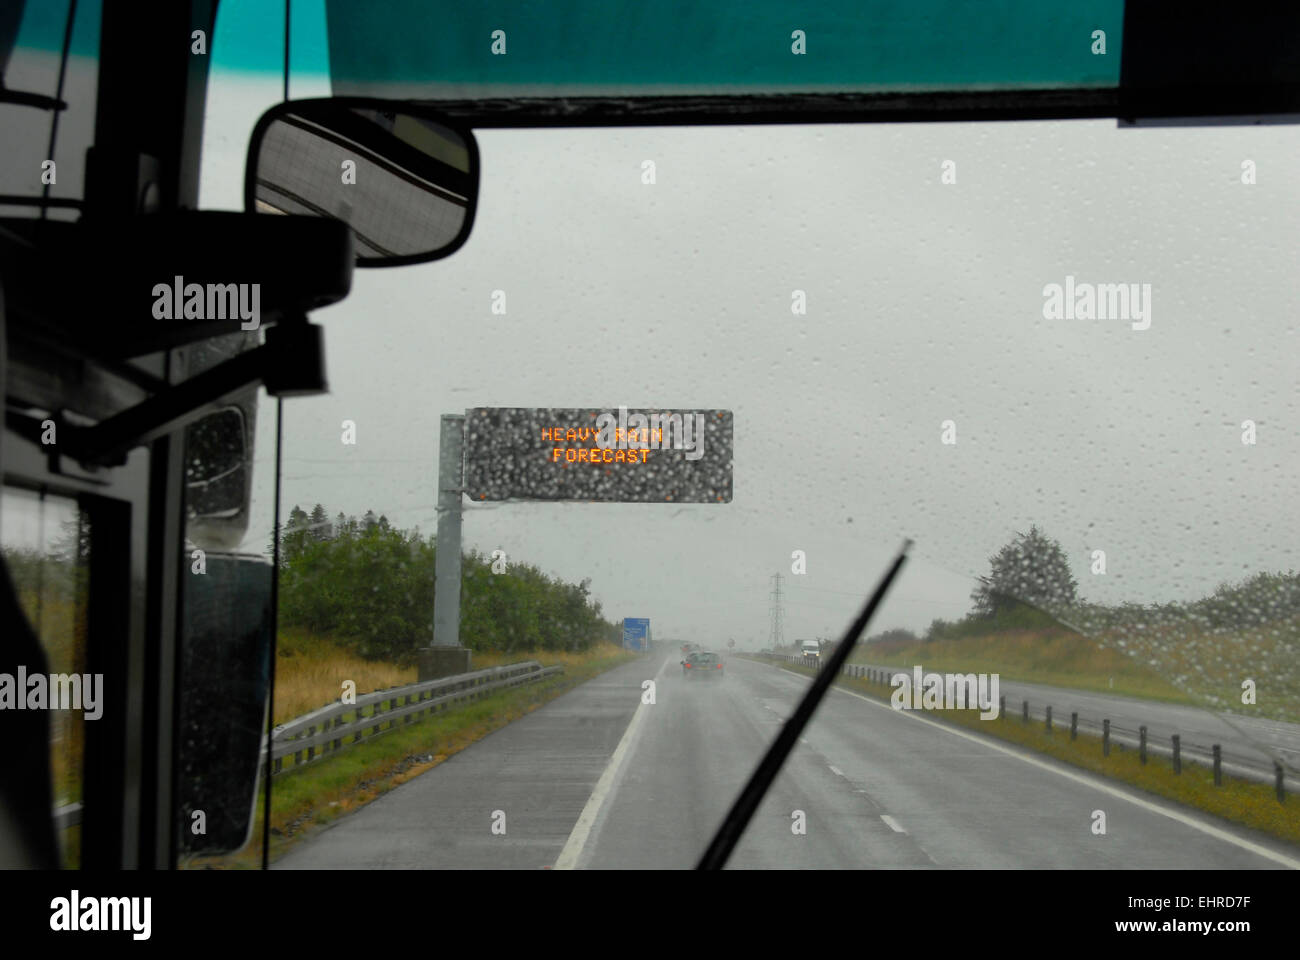 Heavy Rain meteo sign in autostrada Foto Stock